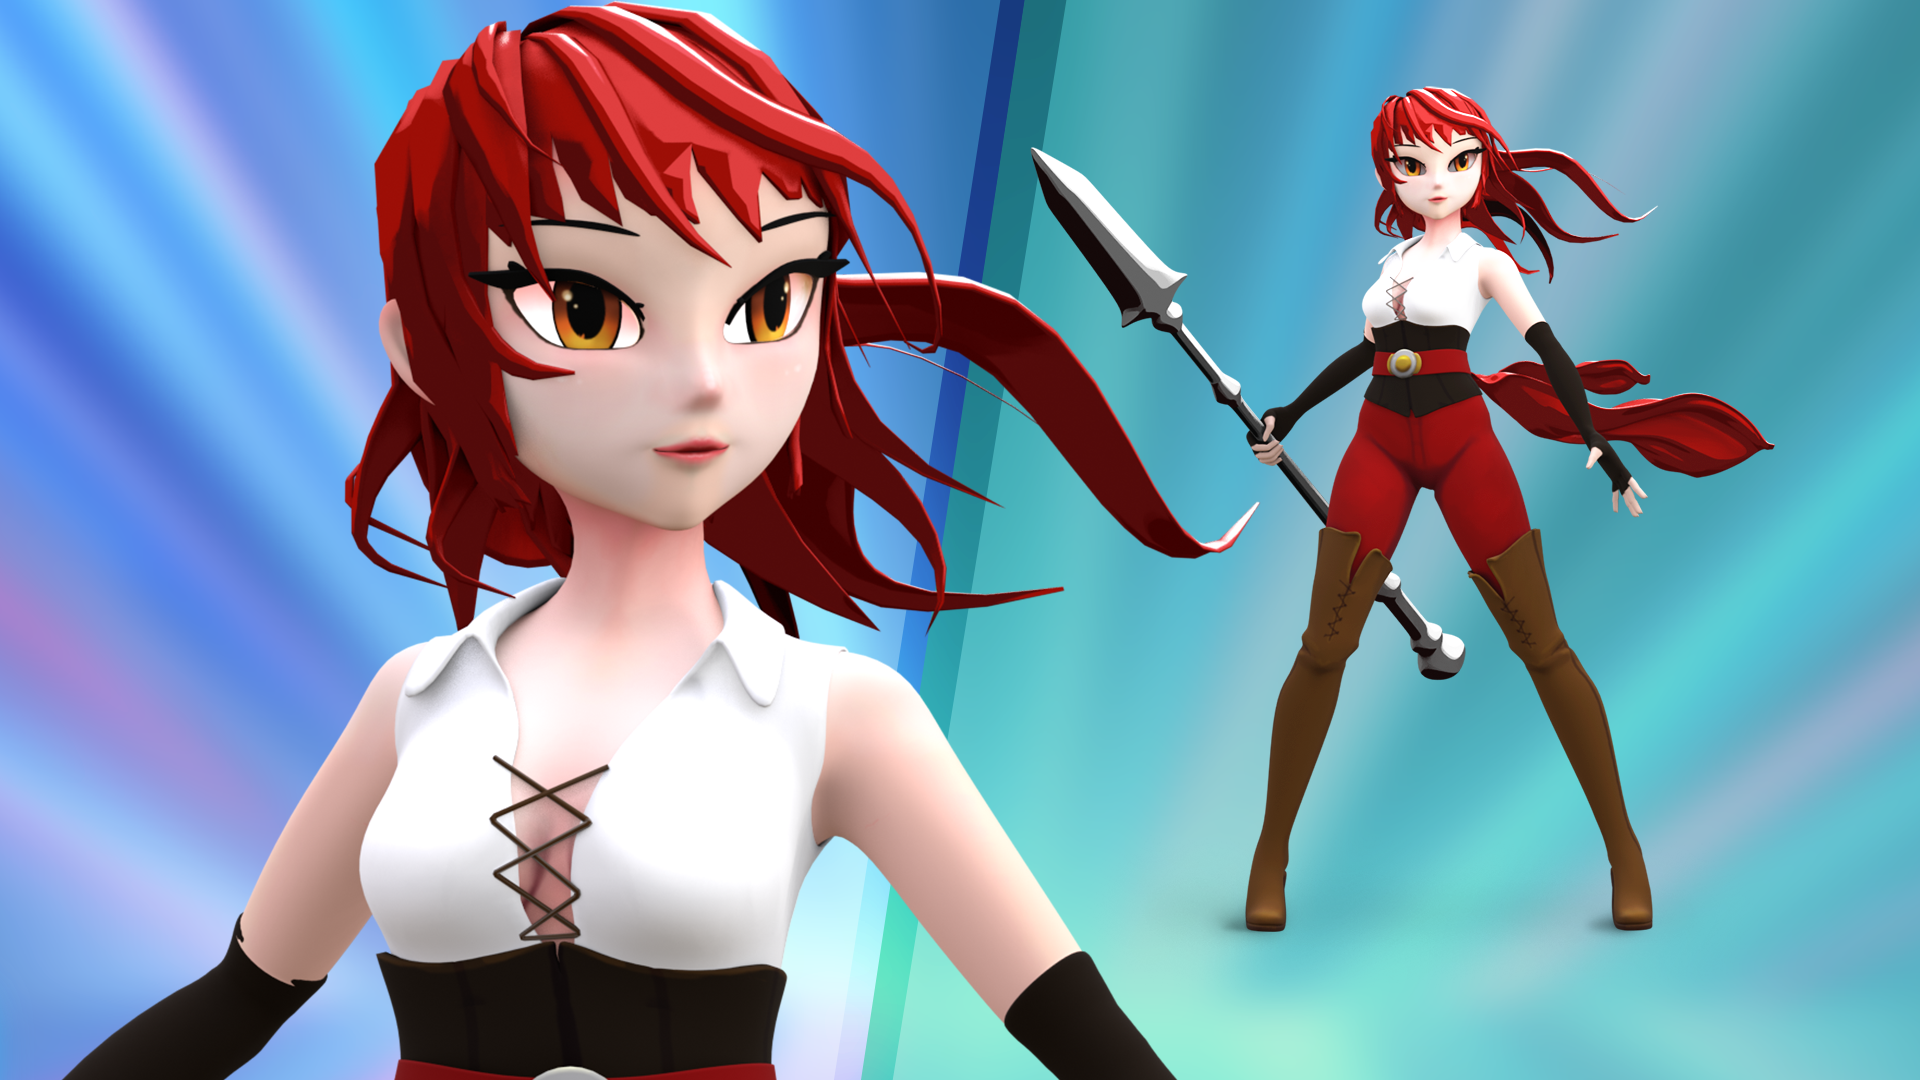 Anime Character Creator: Make 3D Anime Characters in Blender | GameDev